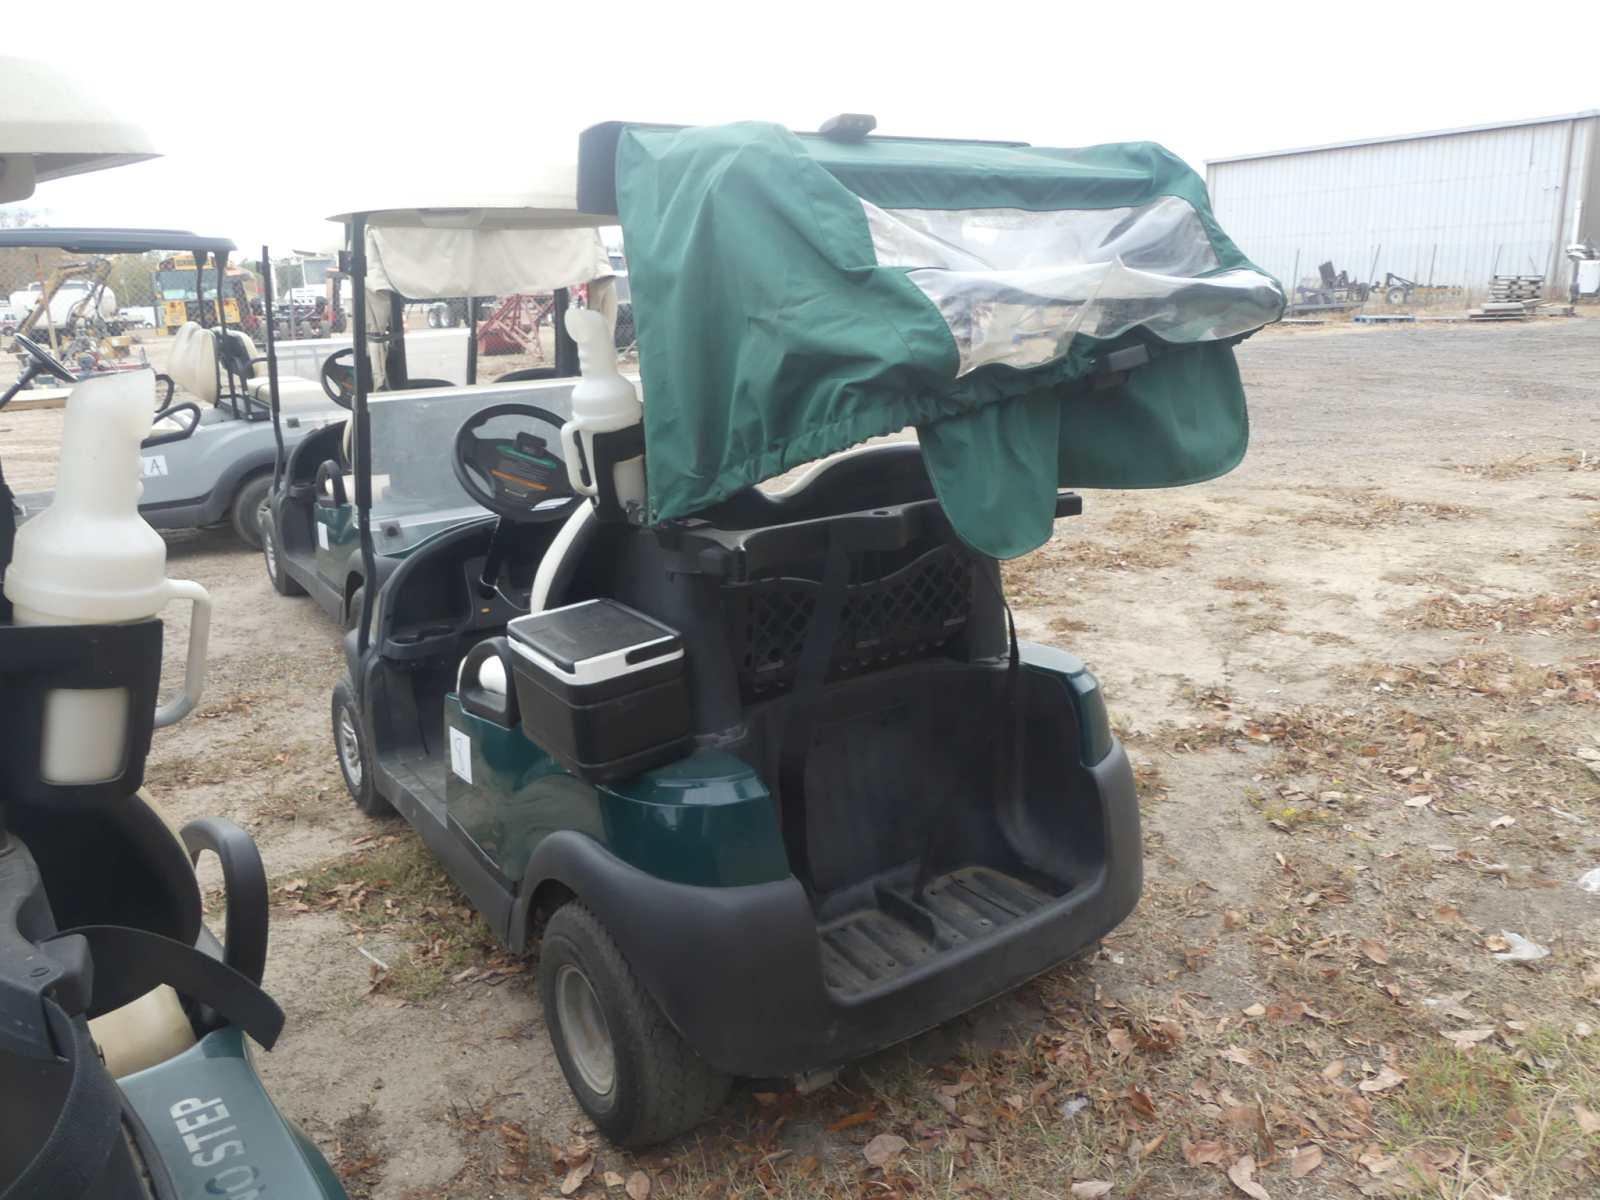 2020 Club Car Precedent Electric Golf Cart, s/n JE2042-119303 (No Title): w